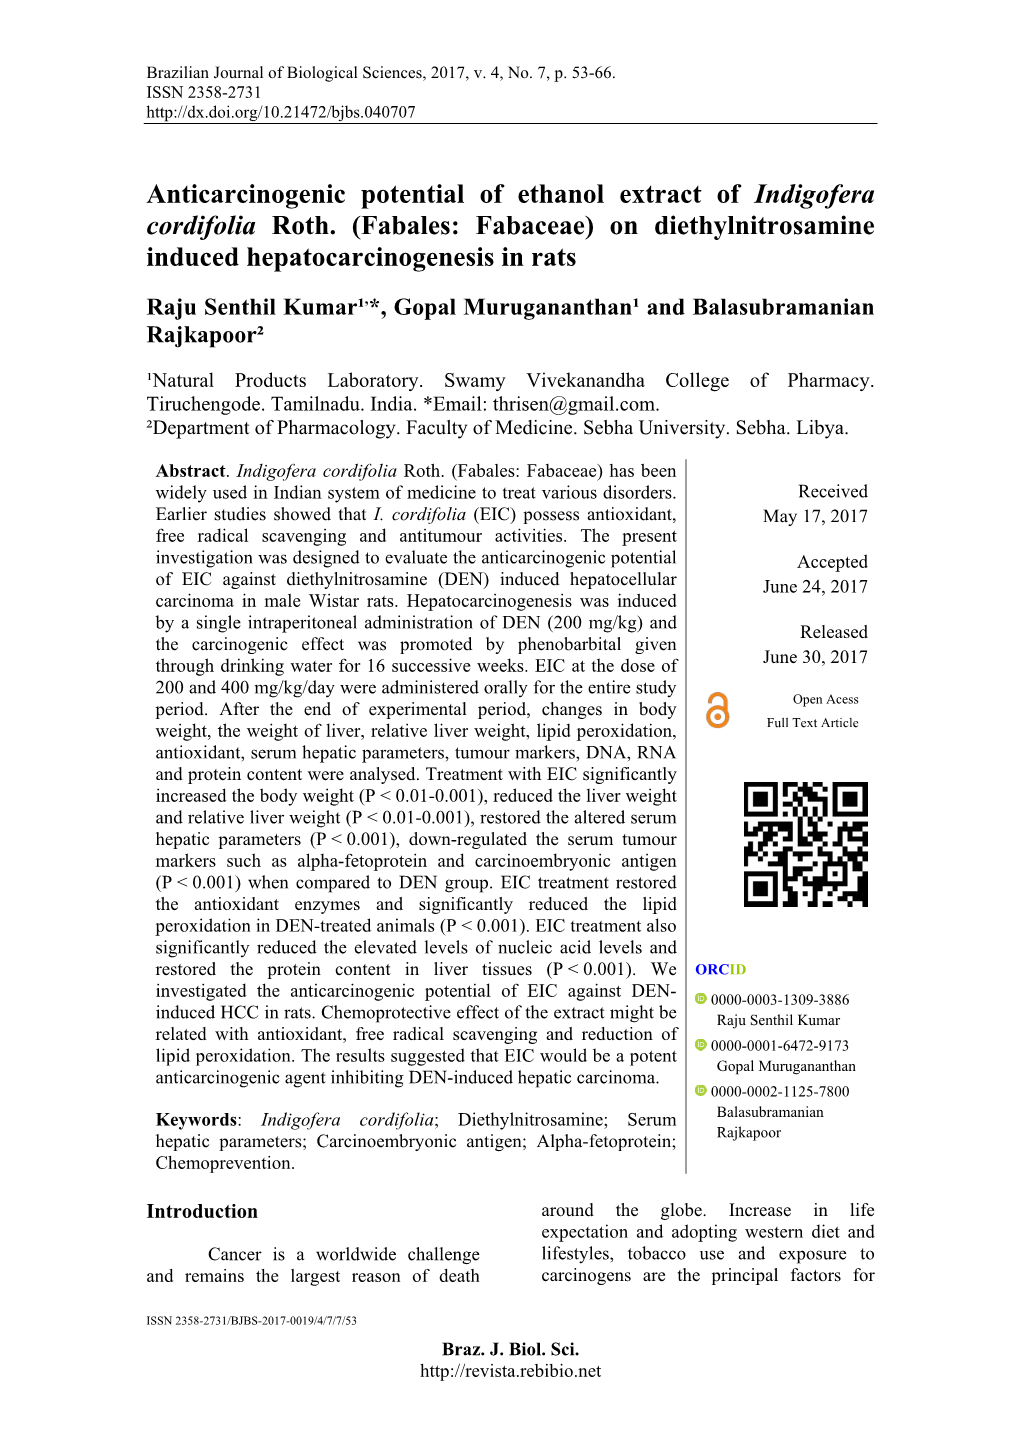 Anticarcinogenic Potential of Ethanol Extract of Indigofera Cordifolia Roth